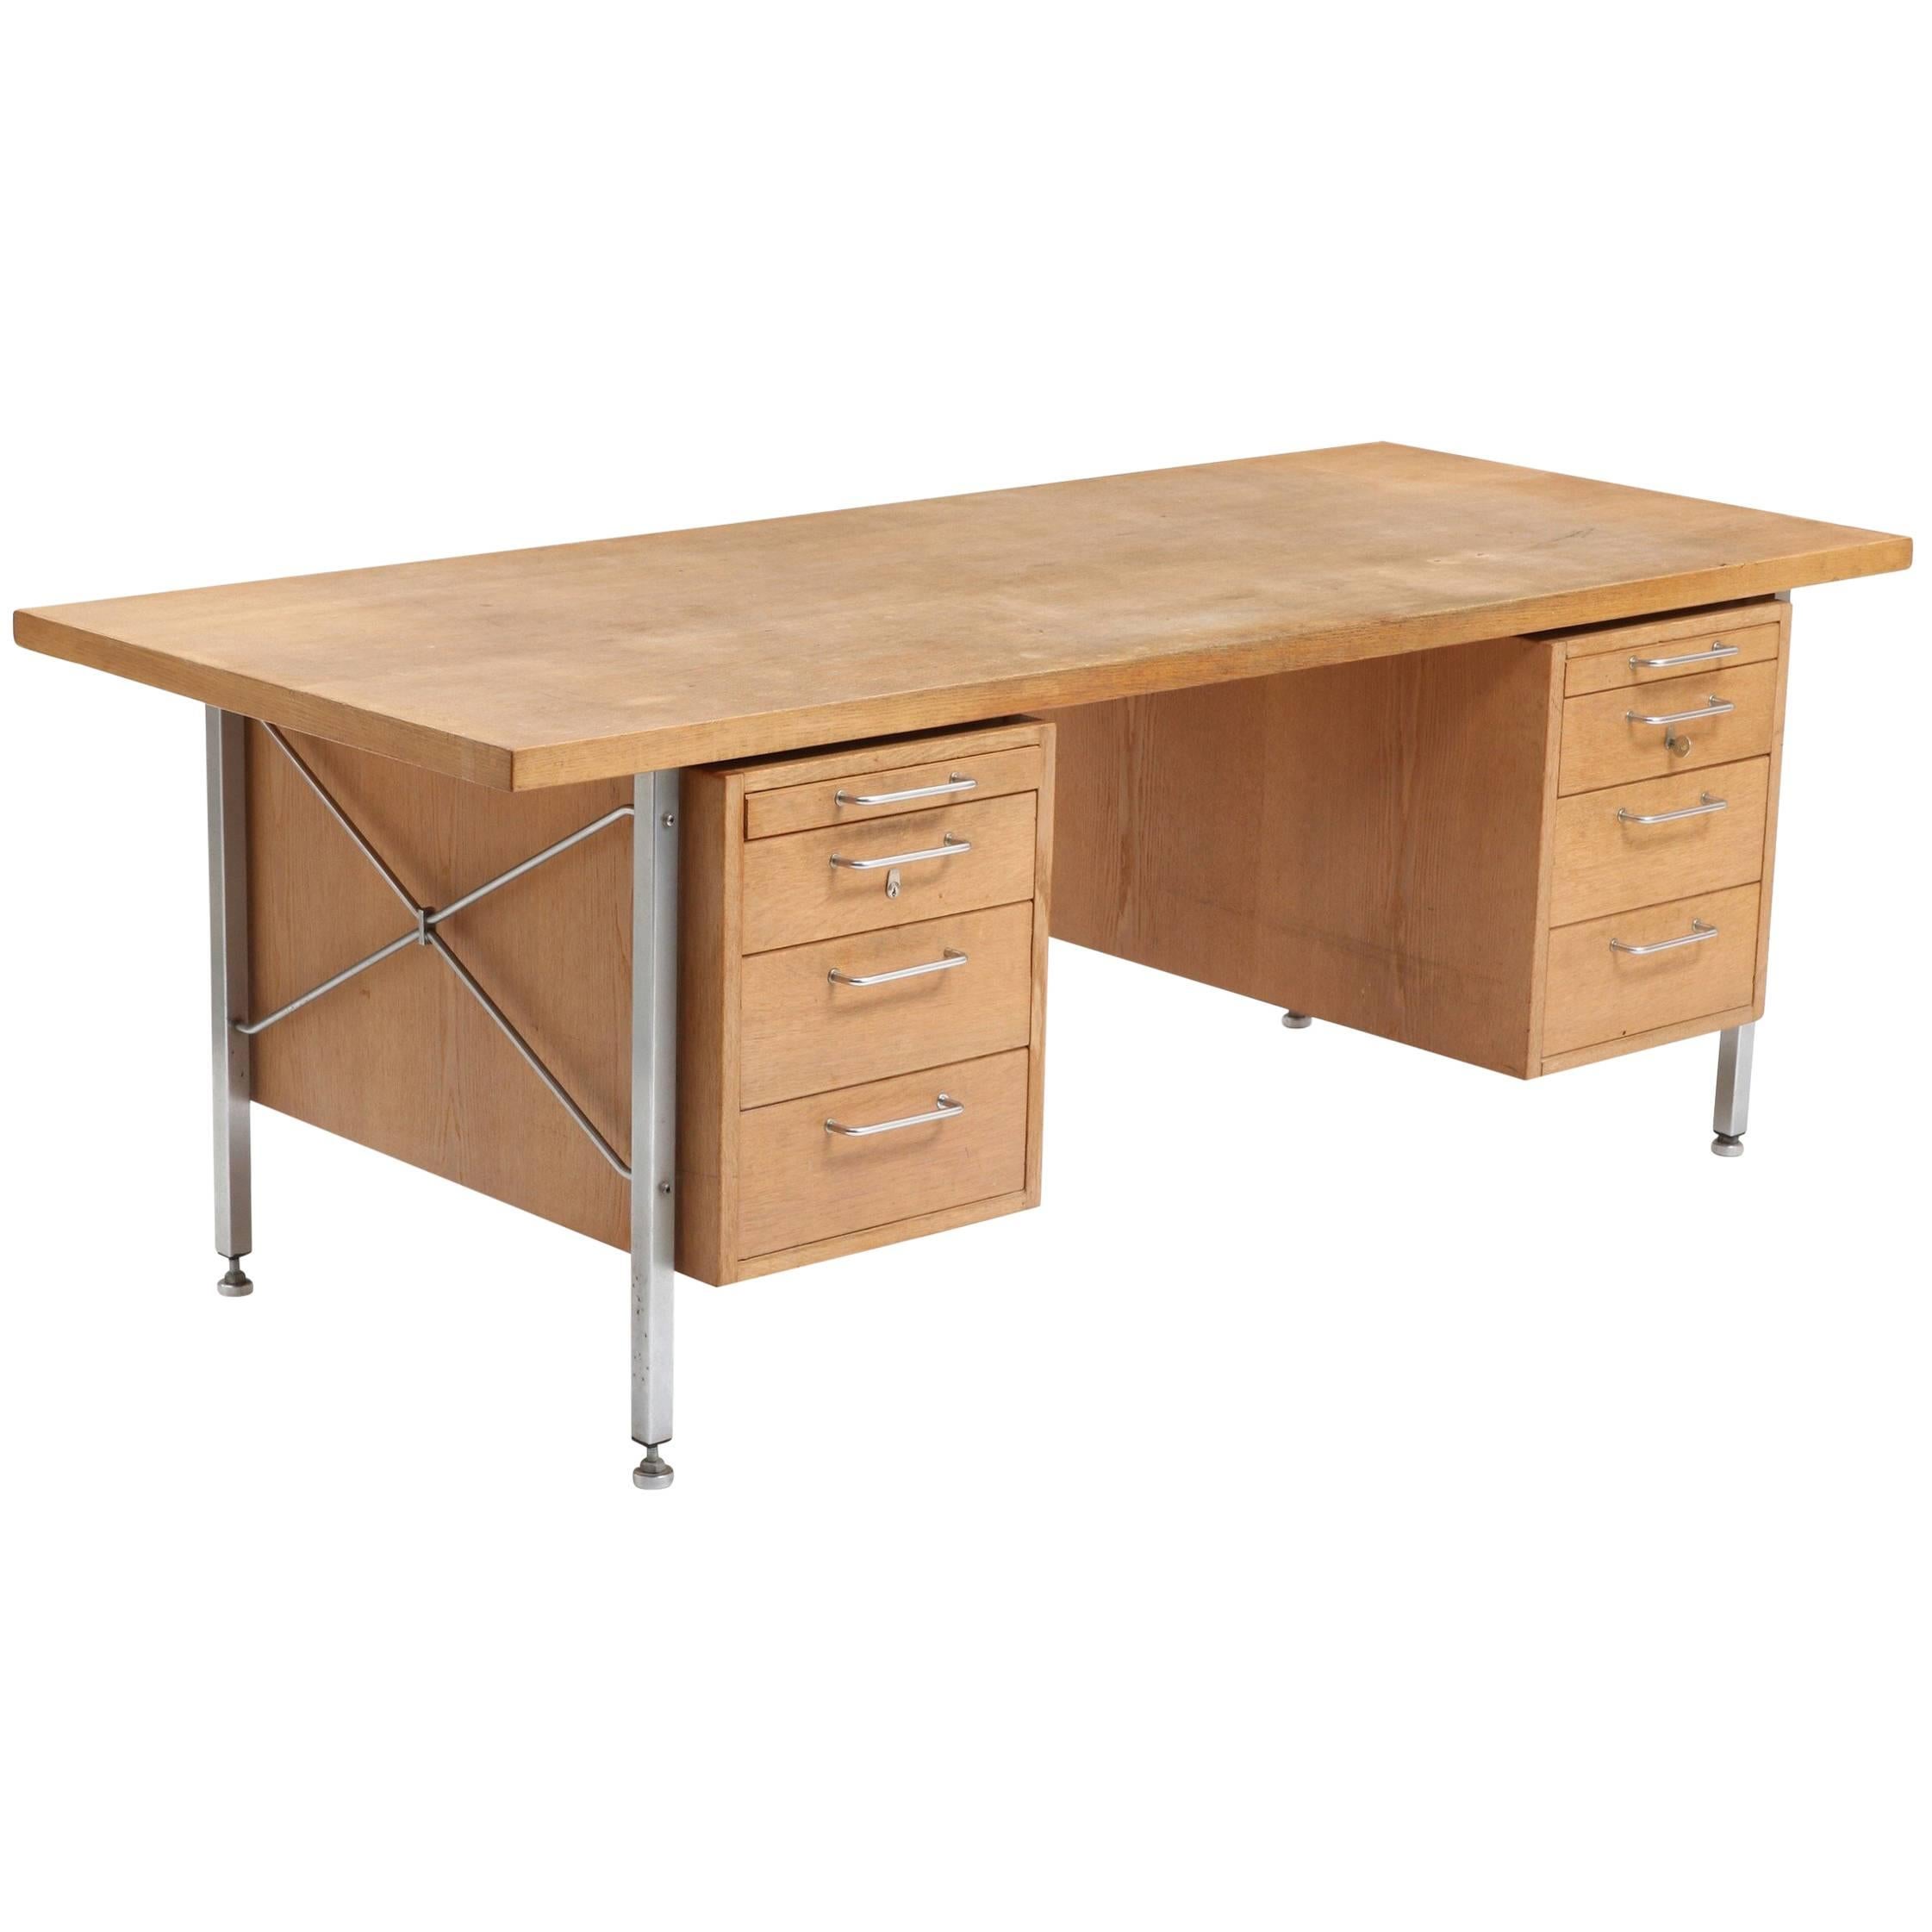 Hans Wegner Oak and Steel Desk Made by Johannes Hansen or Plan Mobler For Sale